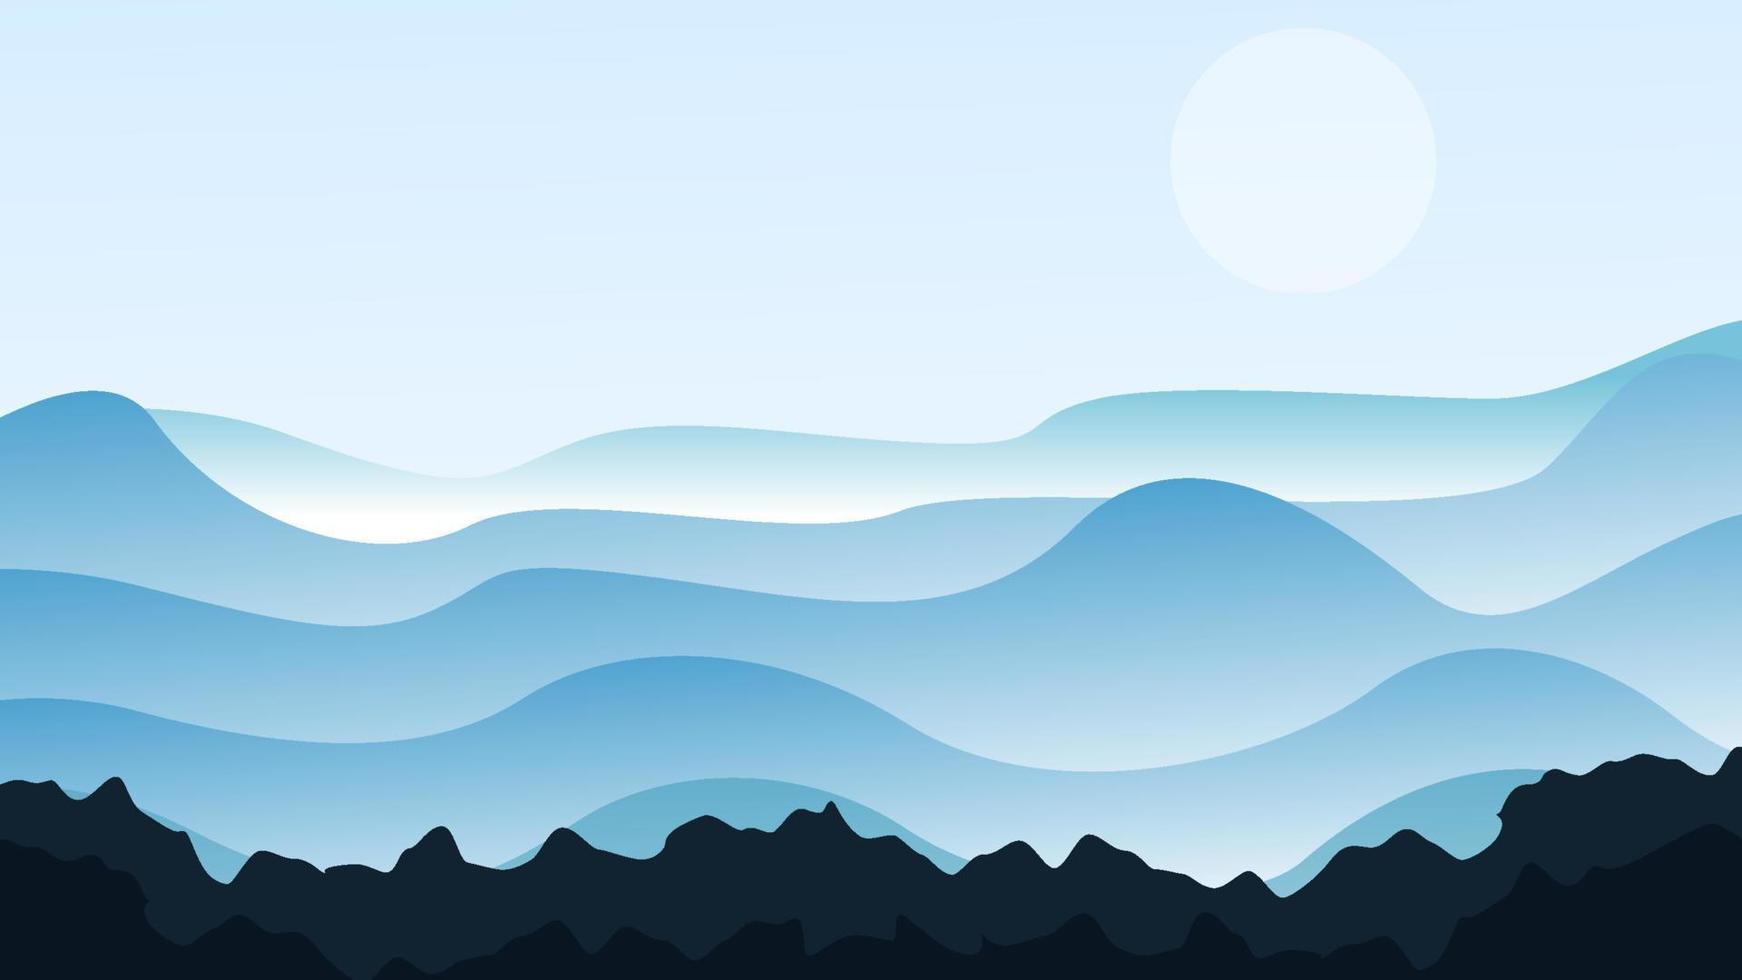 Mountain landscape nature blue sky flat illustration vector